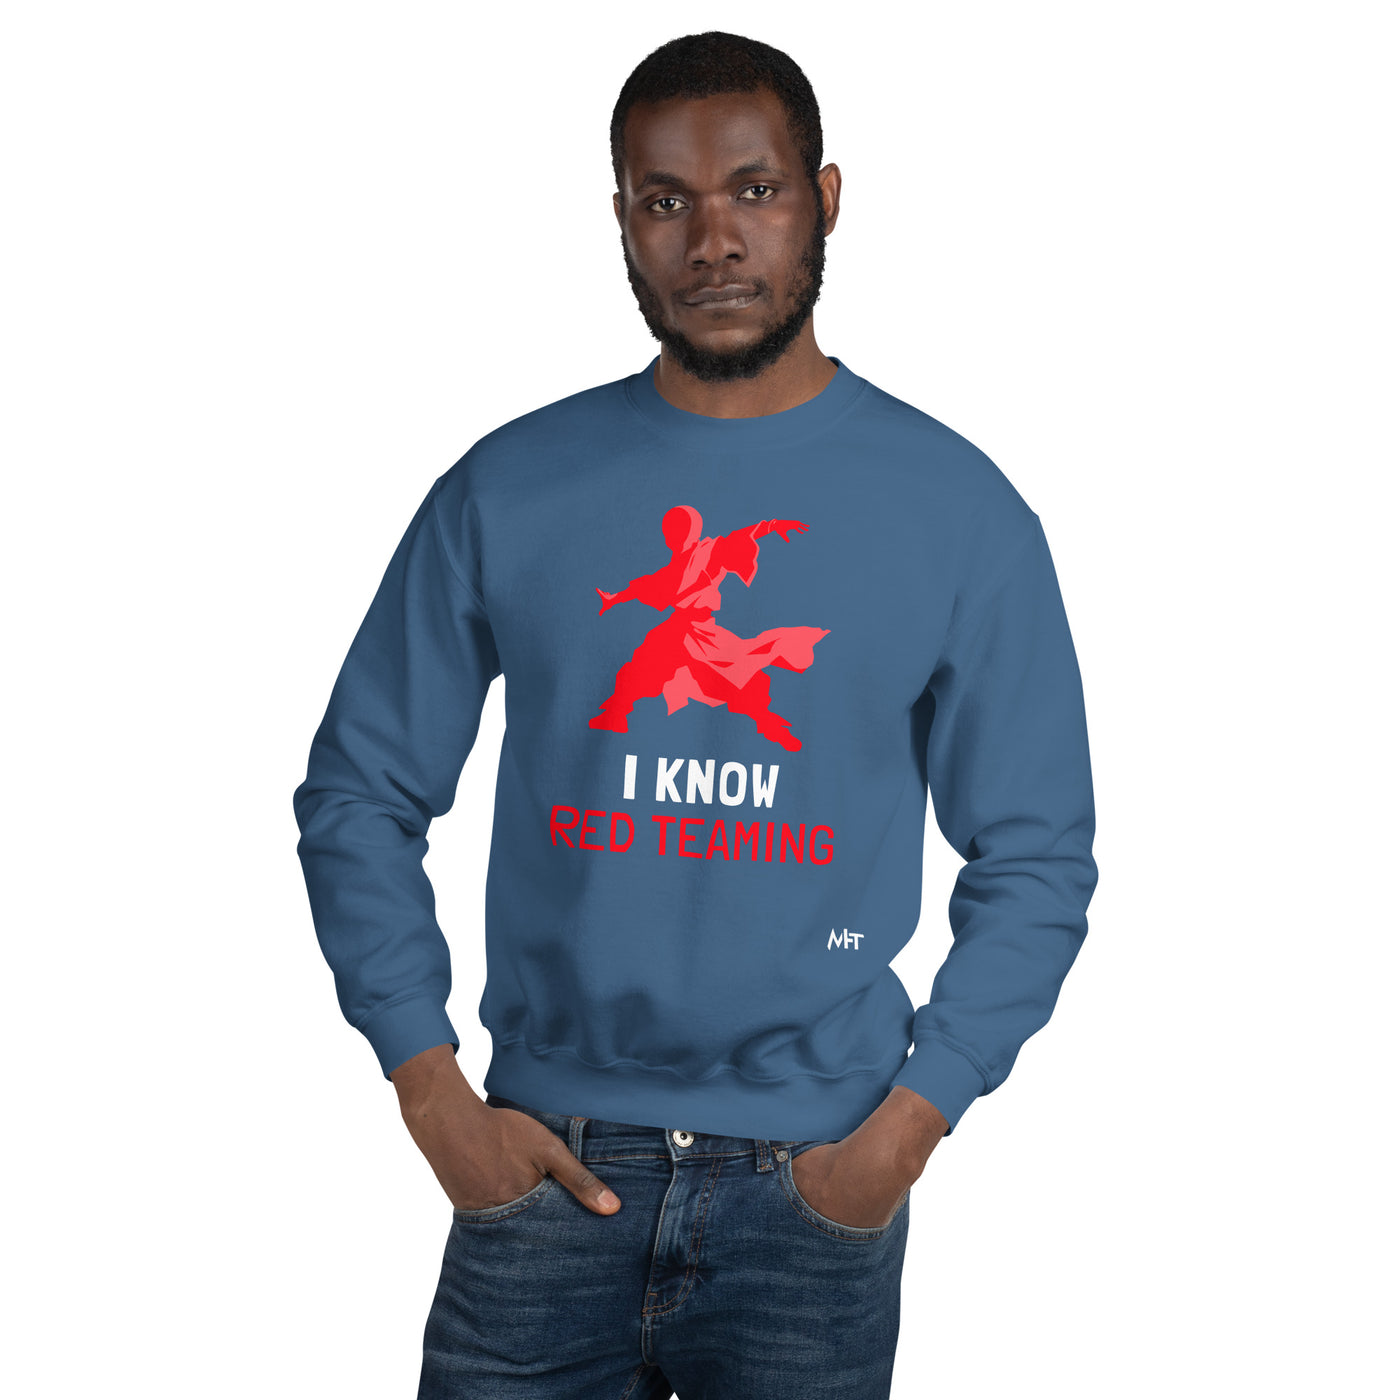 I Know Red Teaming - Unisex Sweatshirt